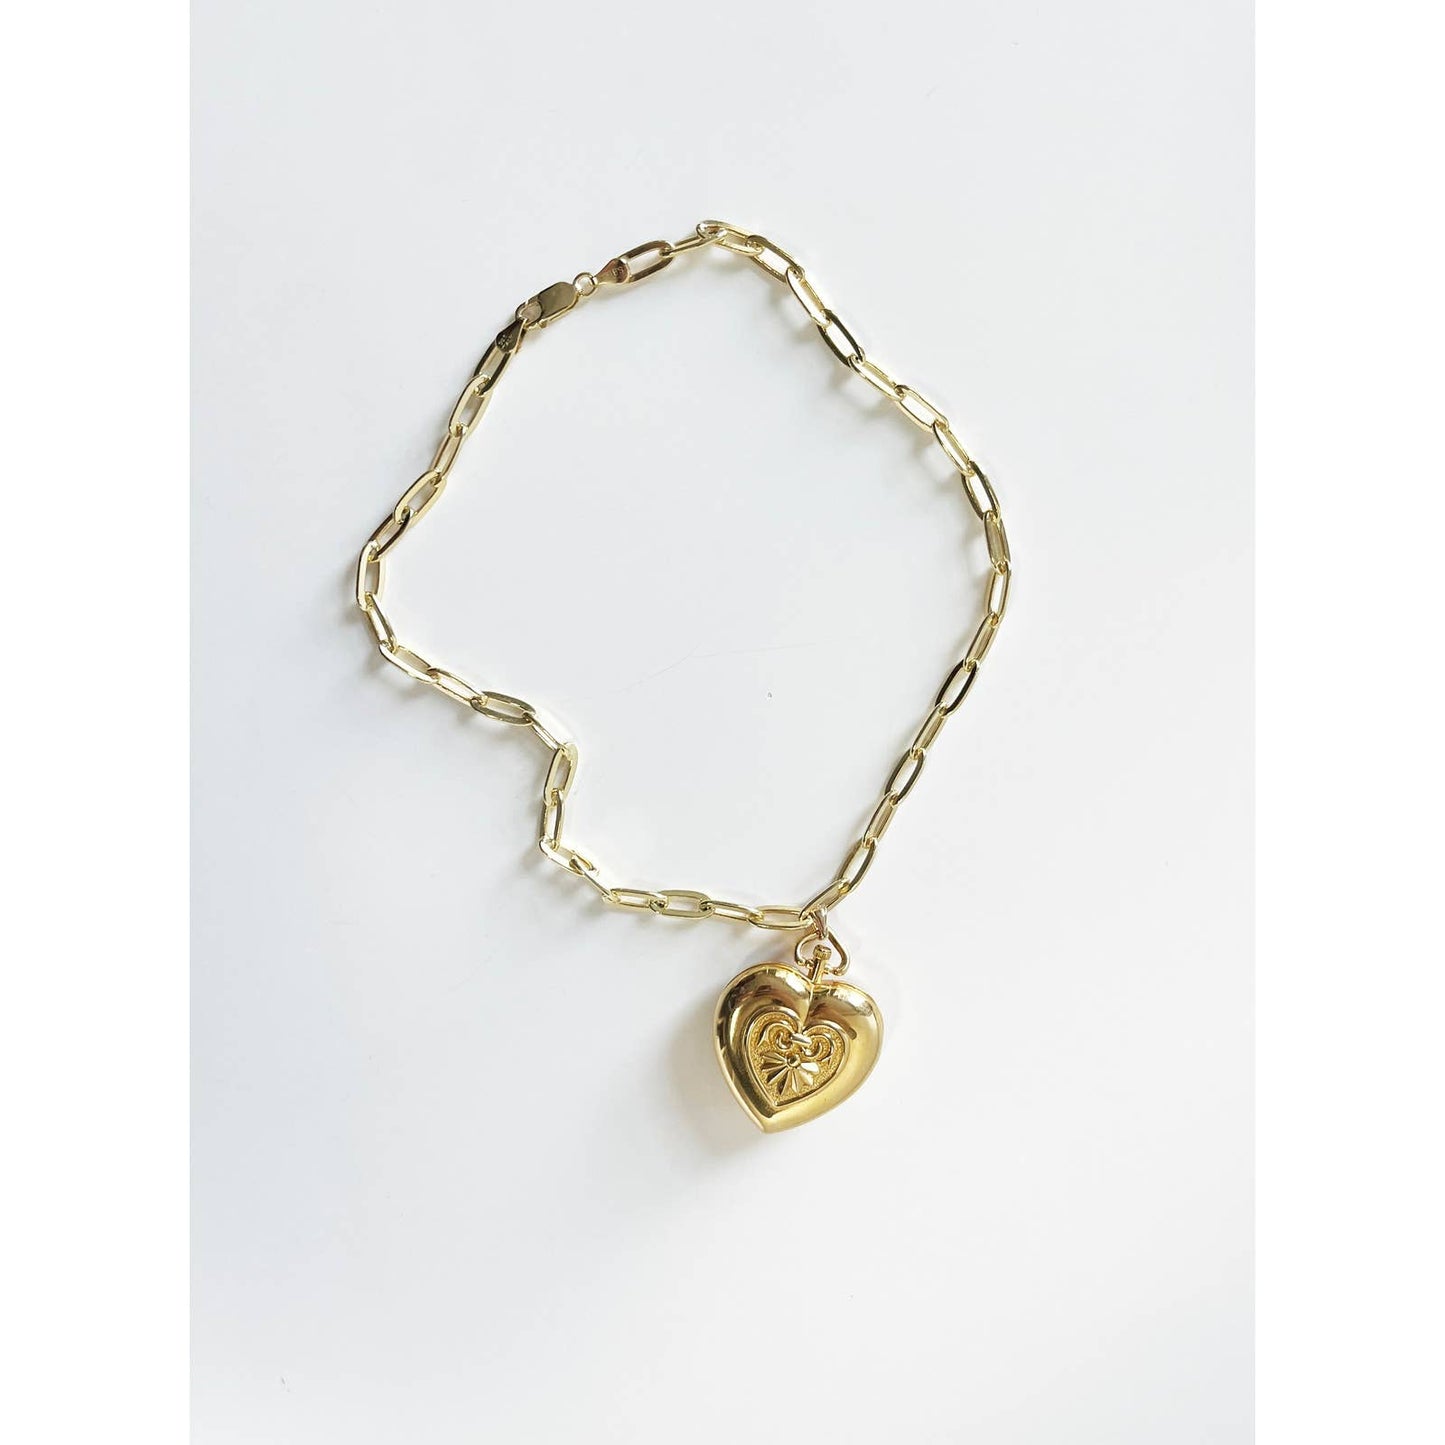 Watch Heart Charm Necklace | 925 Gold Vermeil Chain